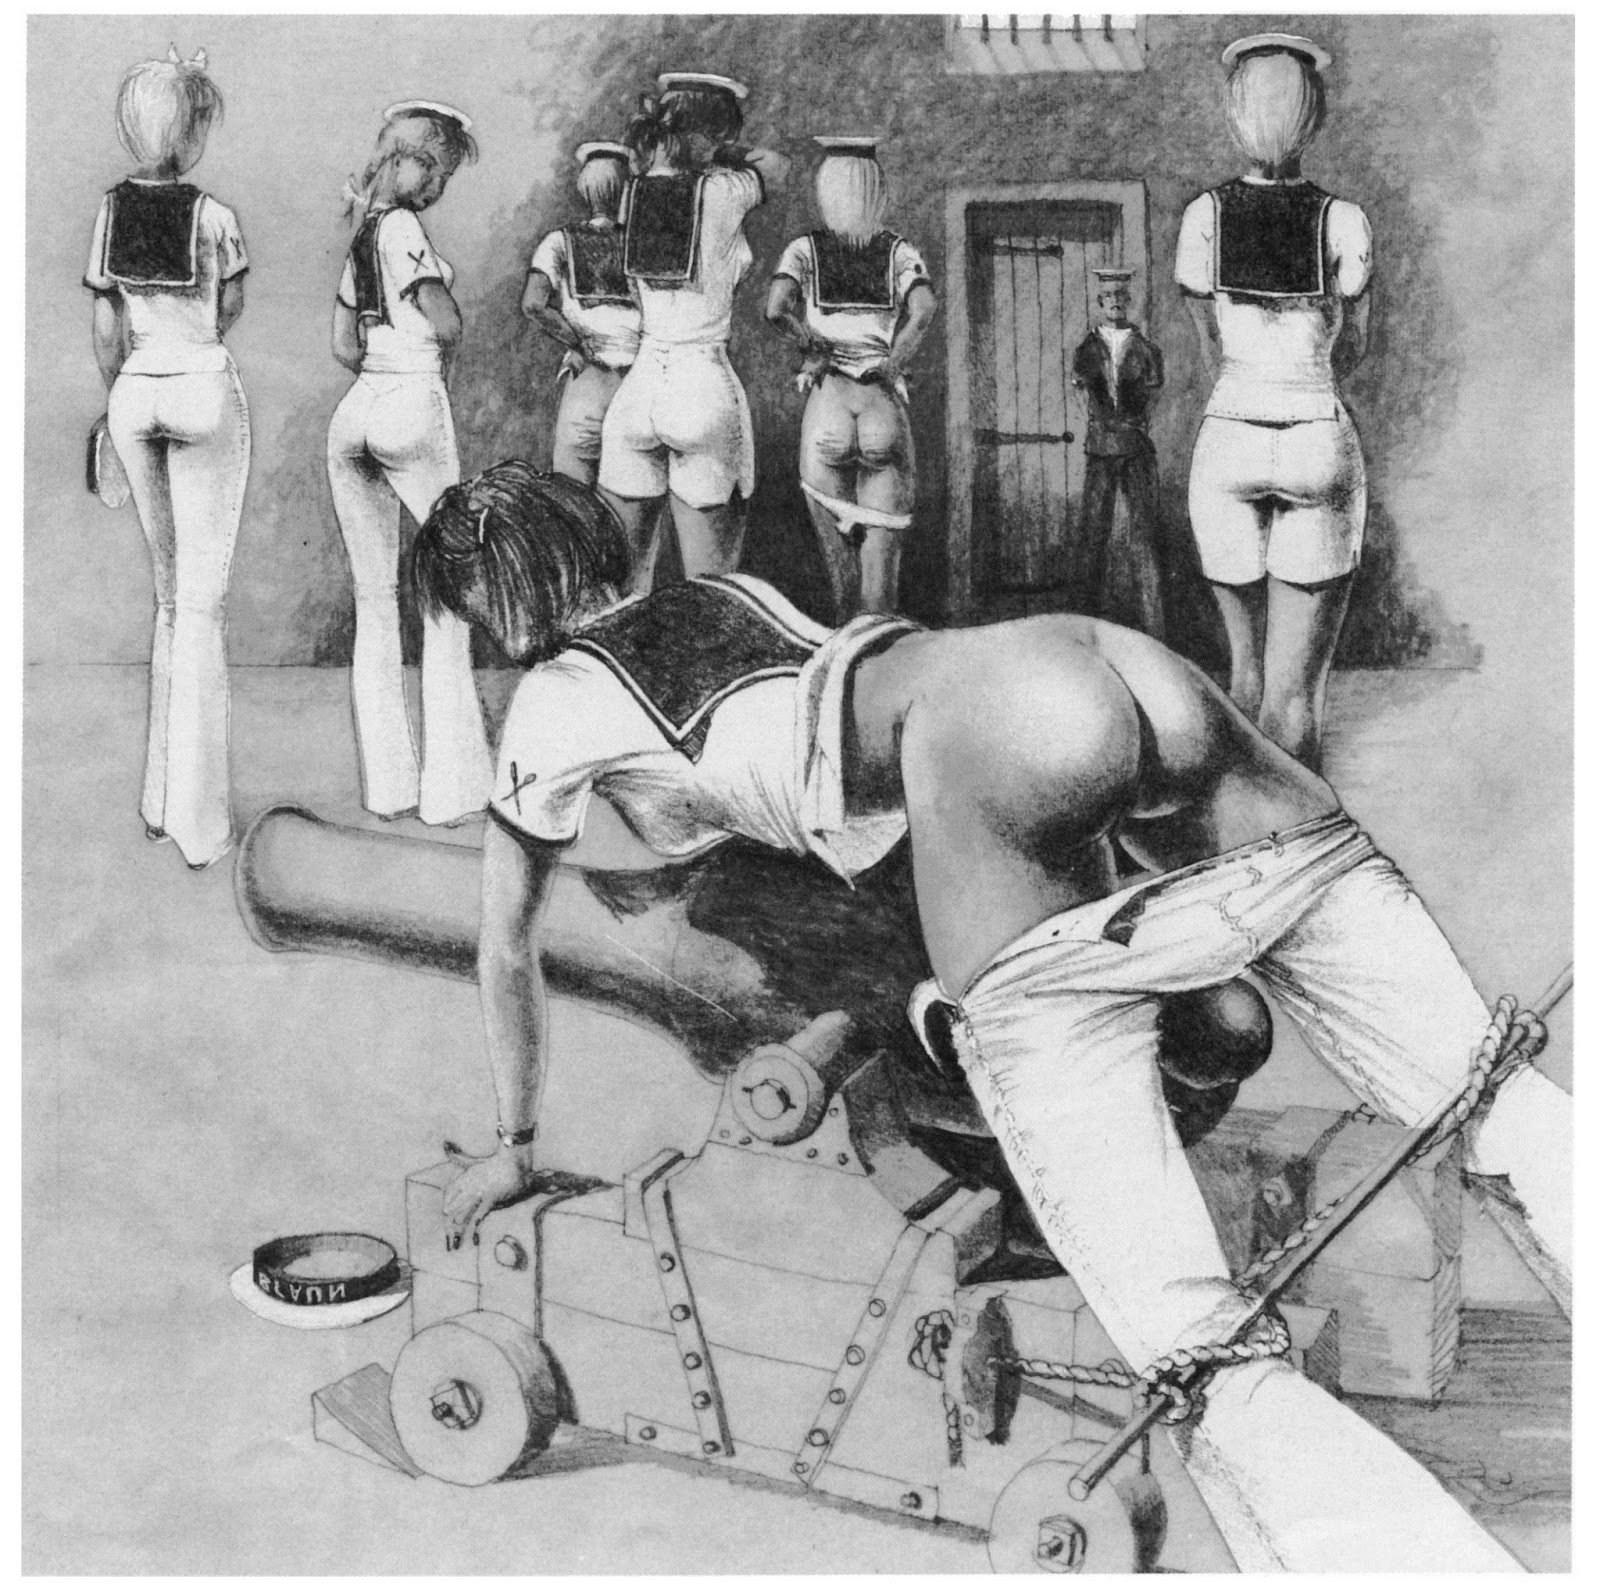 Retro Bdsm Drawing - Corporal Punishment BDSM Art (65 photos) - motherless porn pics